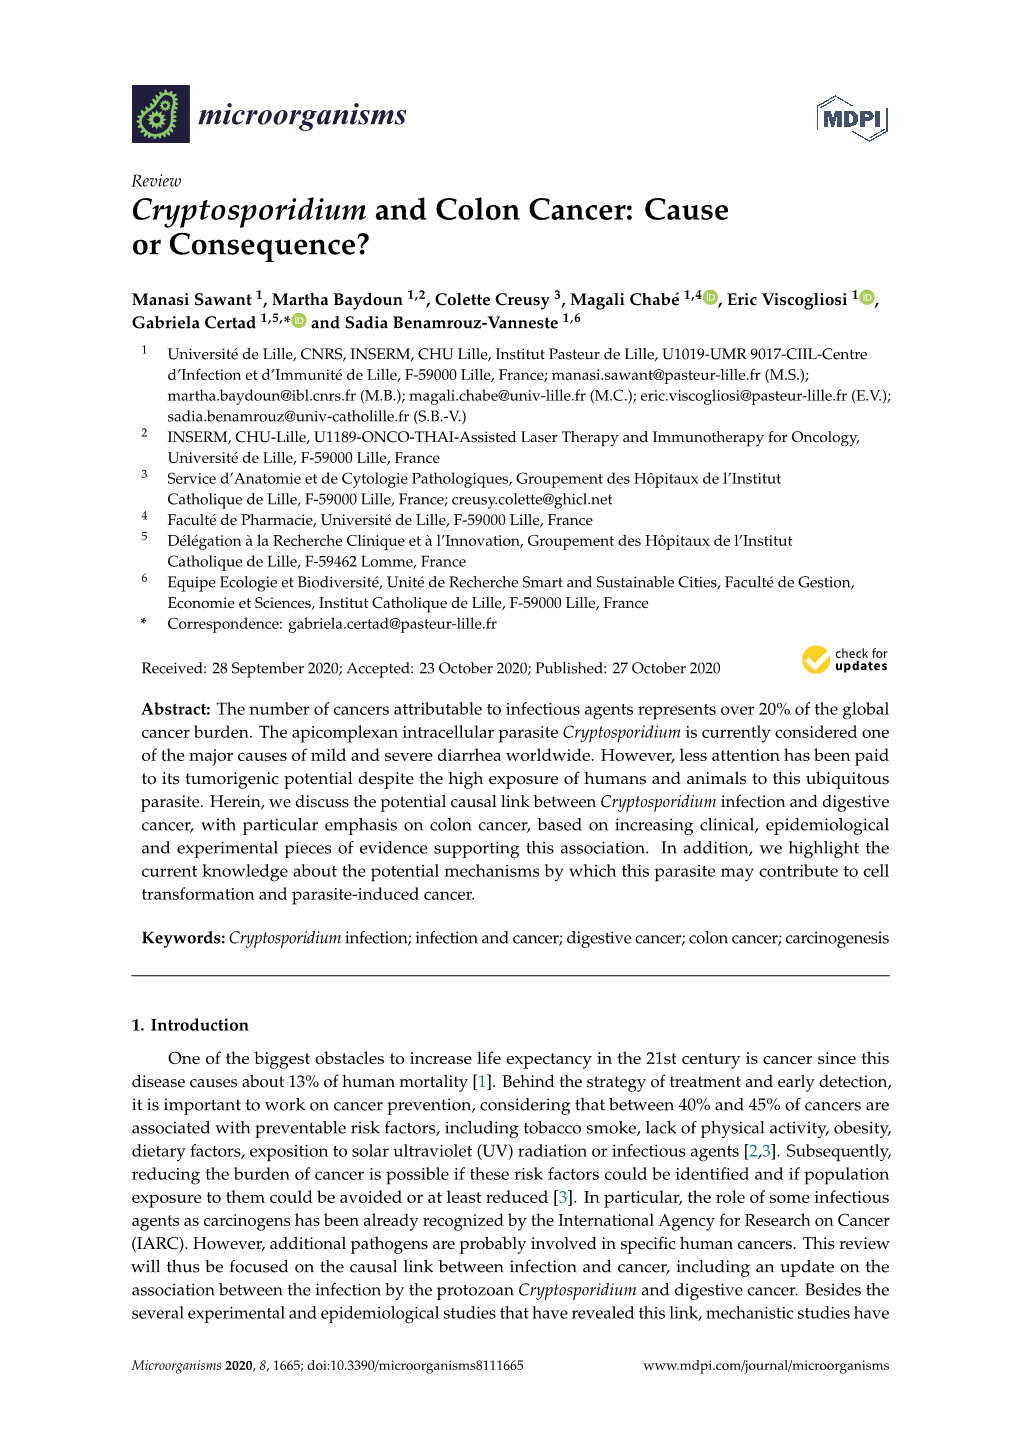 Cryptosporidium and Colon Cancer: Cause Or Consequence?